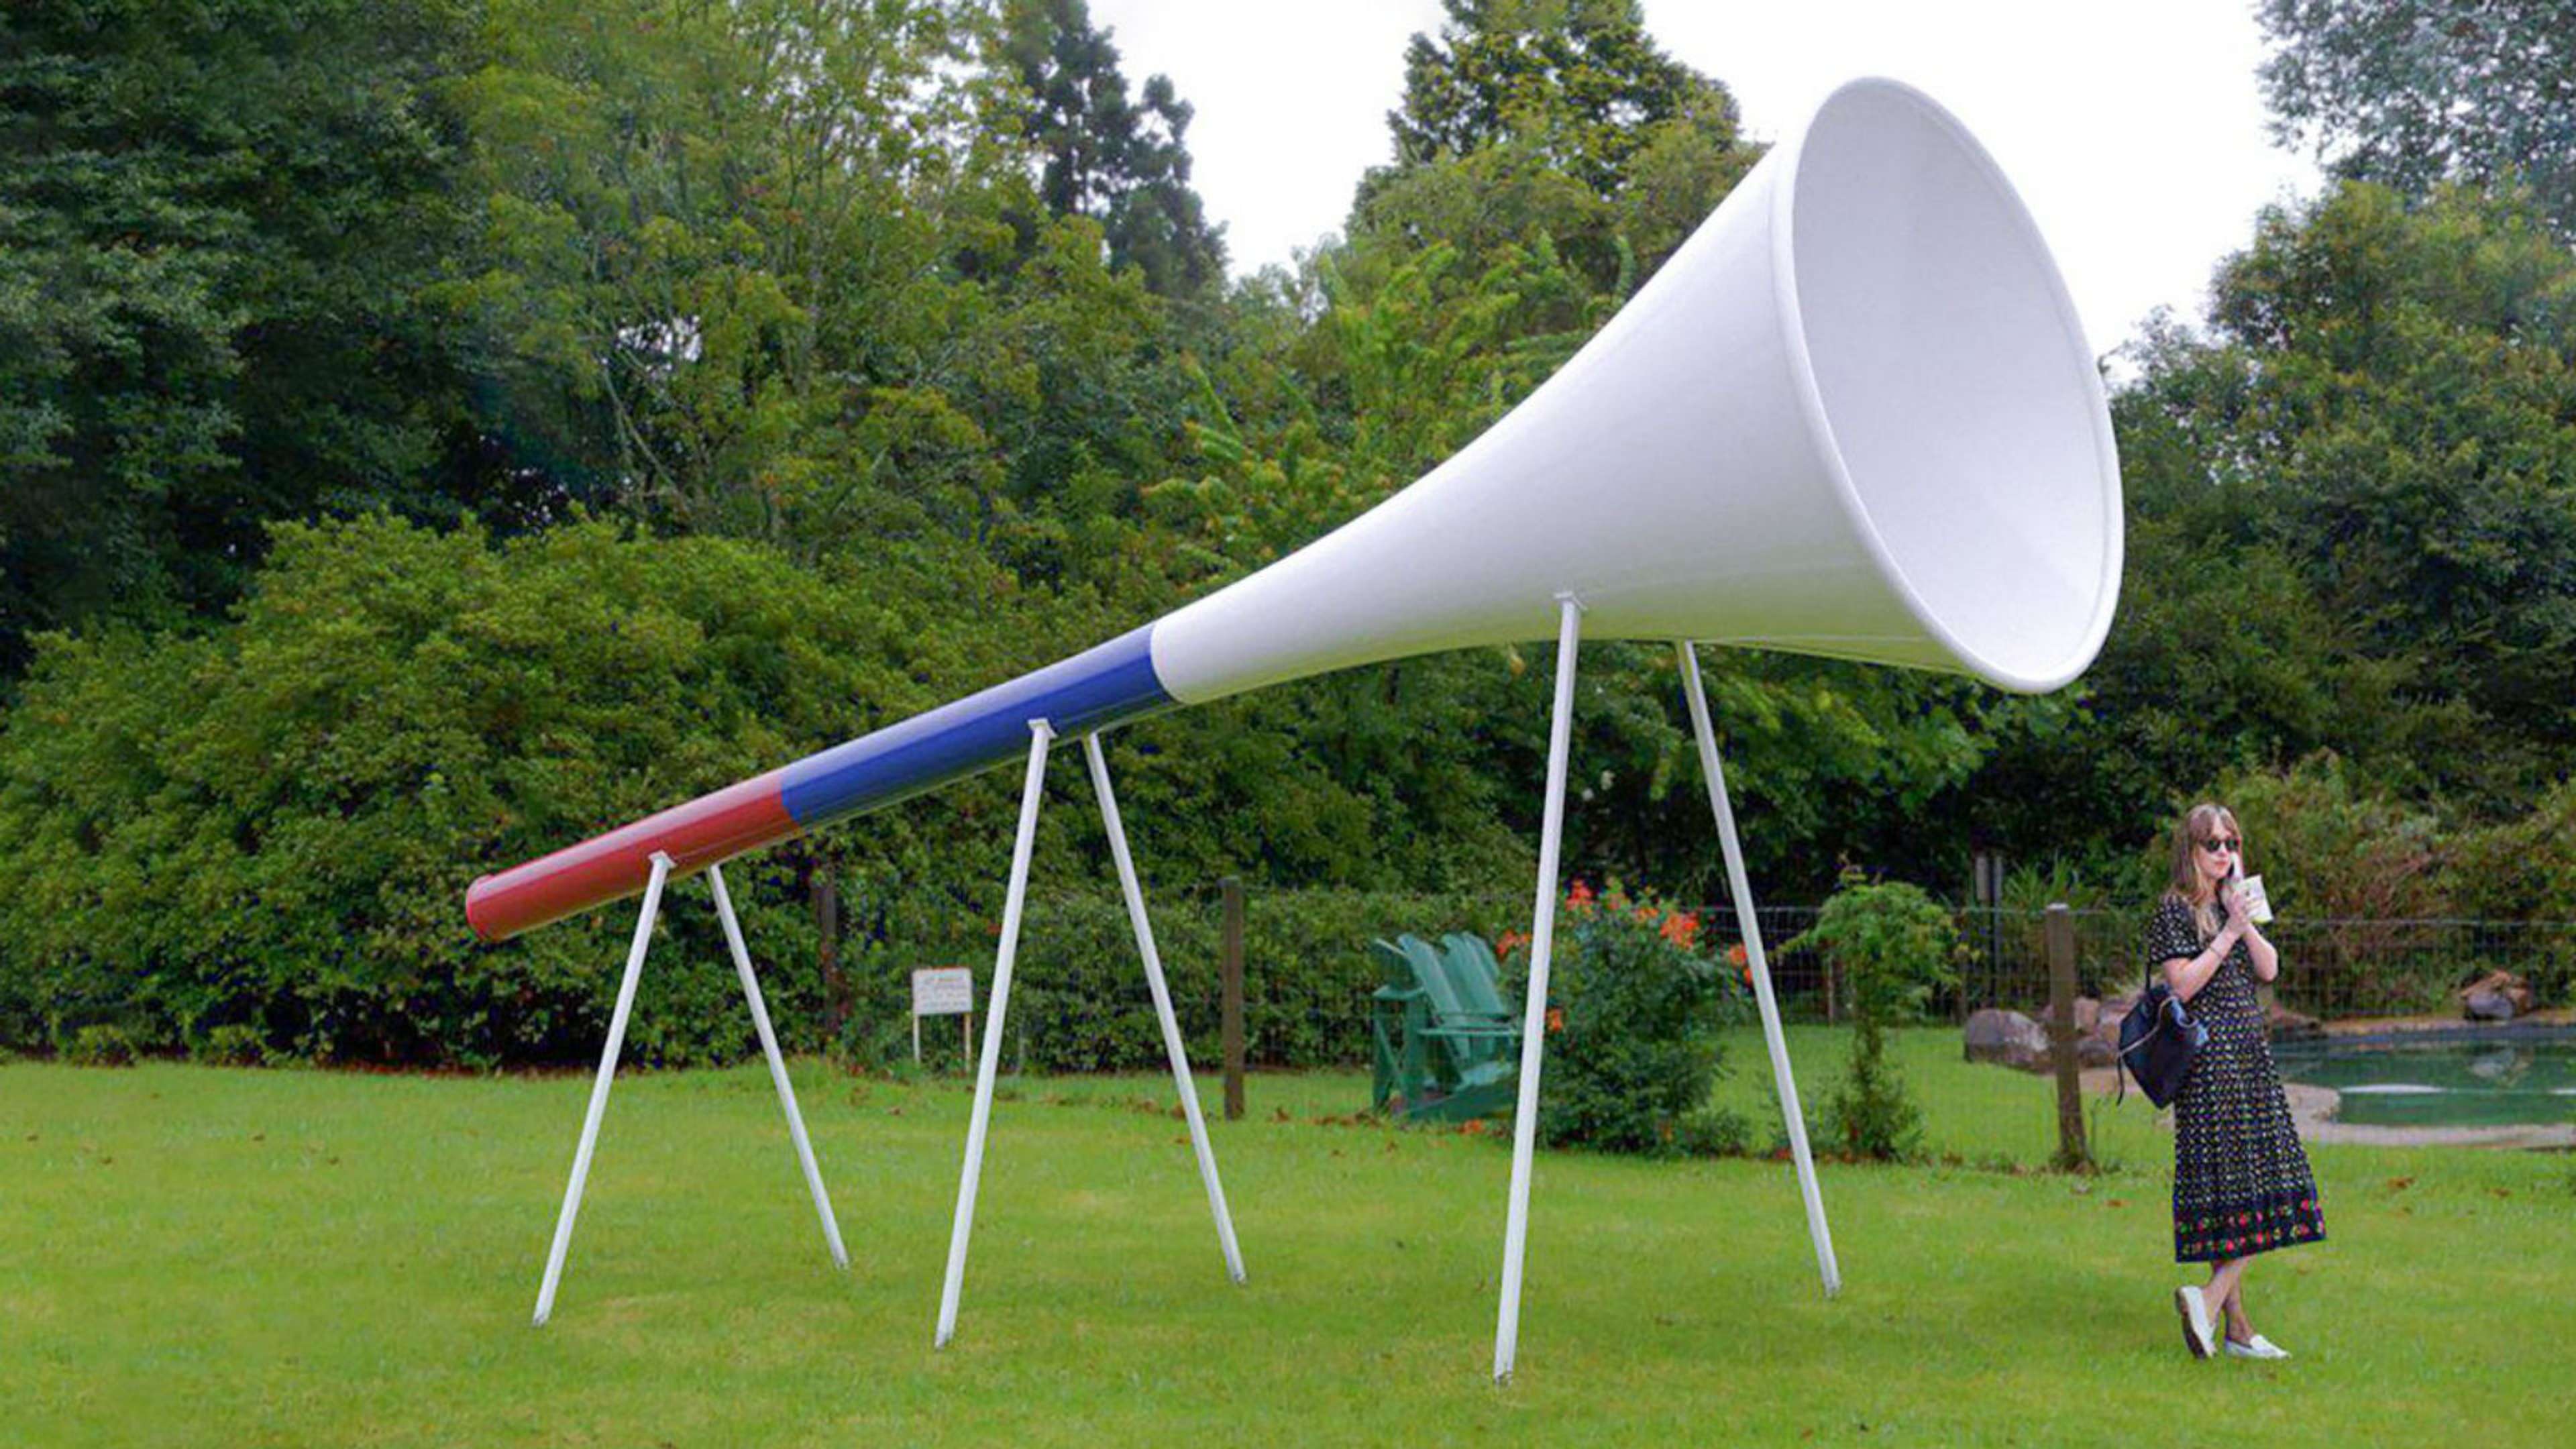 moscow vuvuzela - 29052018